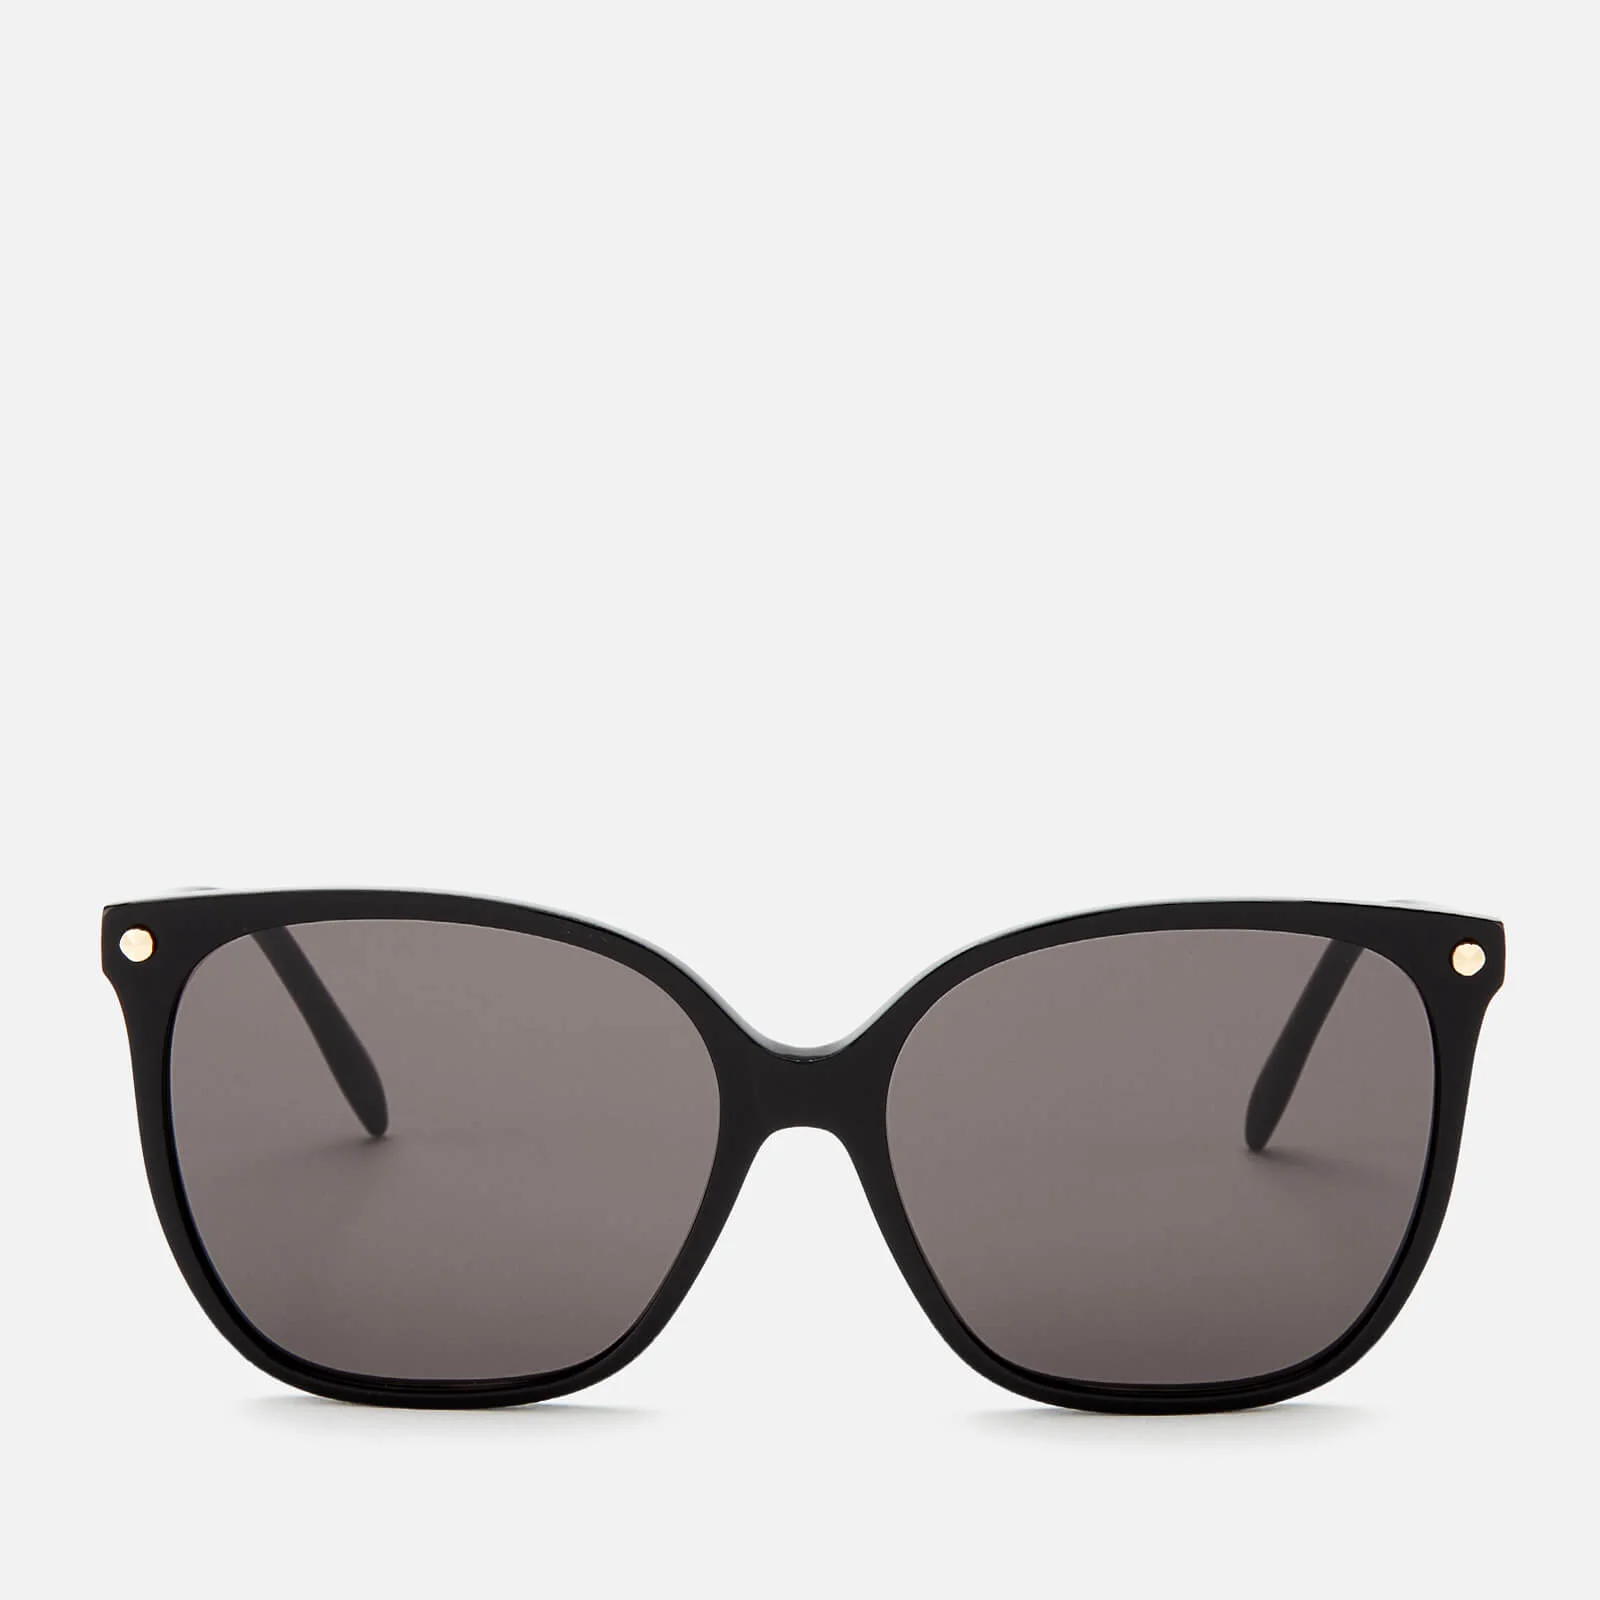 Alexander McQueen Women's Square Frame Acetate Sunglasses - Black/Grey Image 1